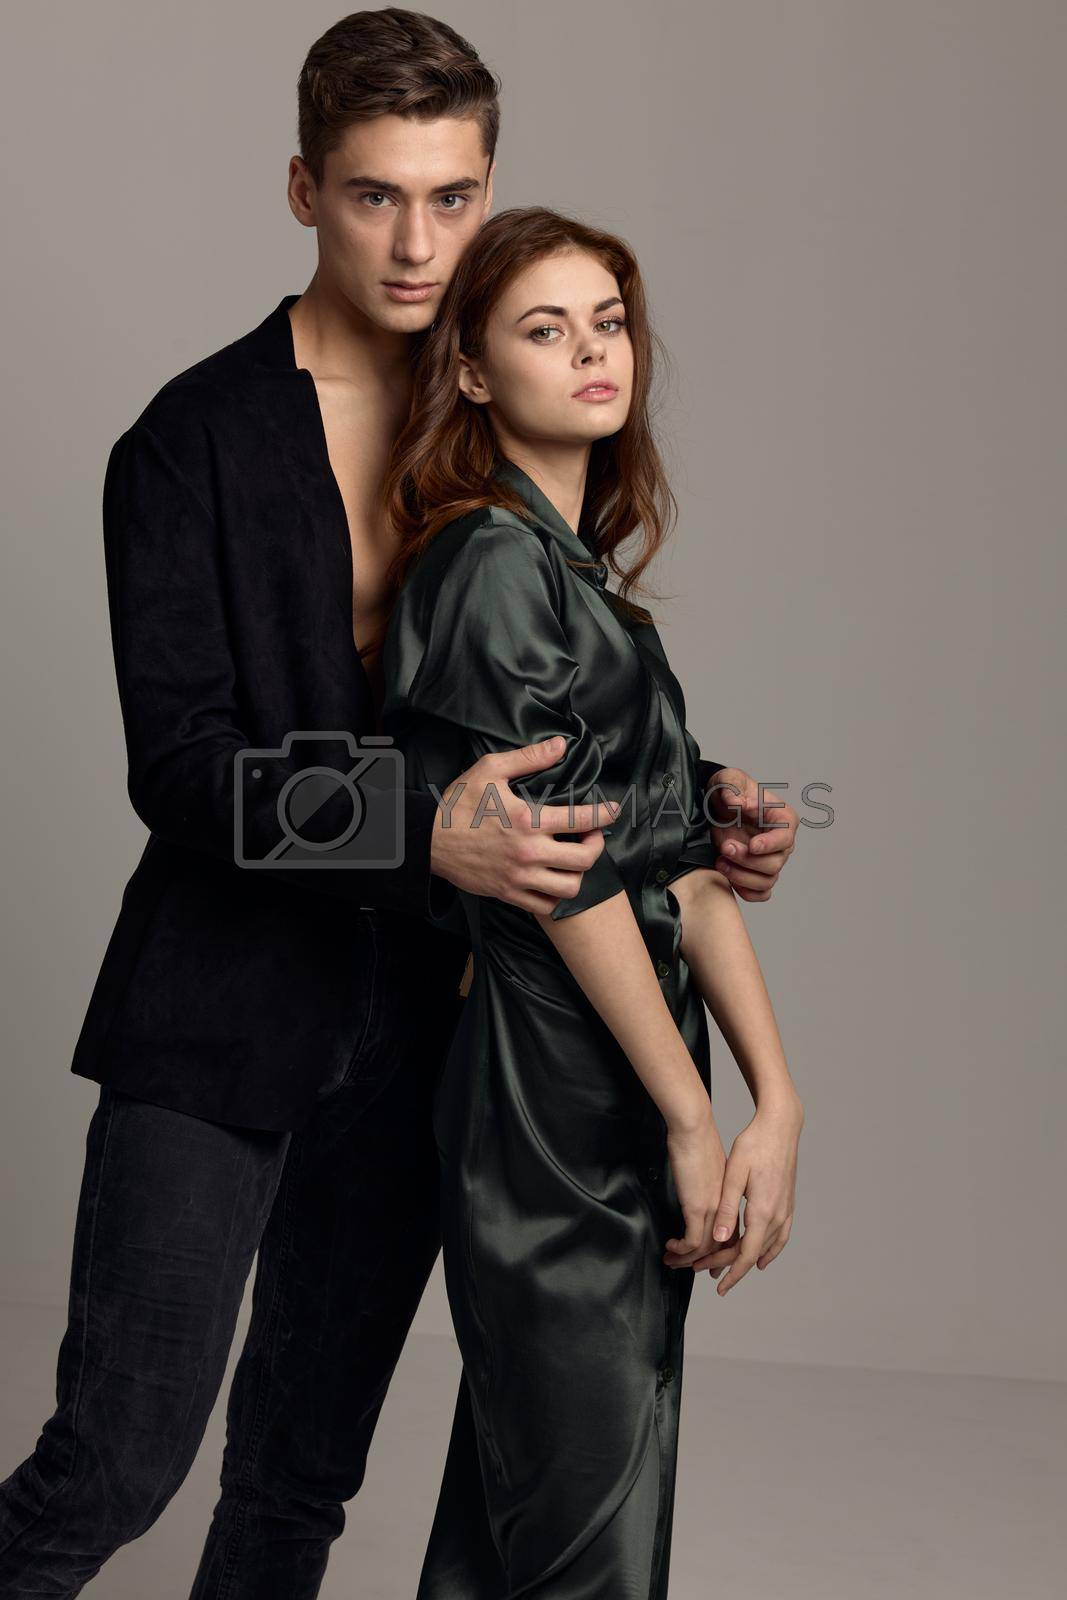 Young couple embrace romance passion luxury attitude. High quality photo